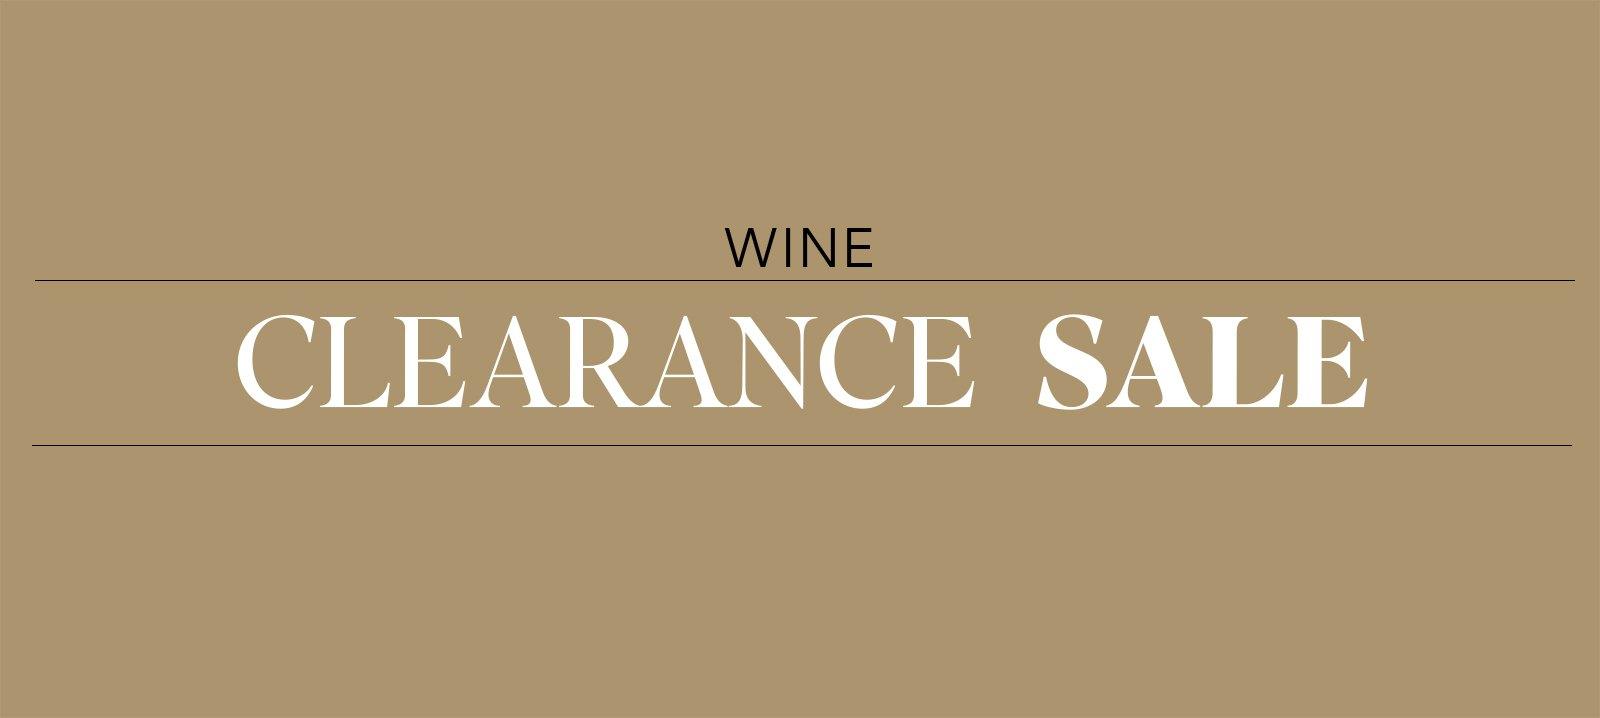 Clearance sale : Wine